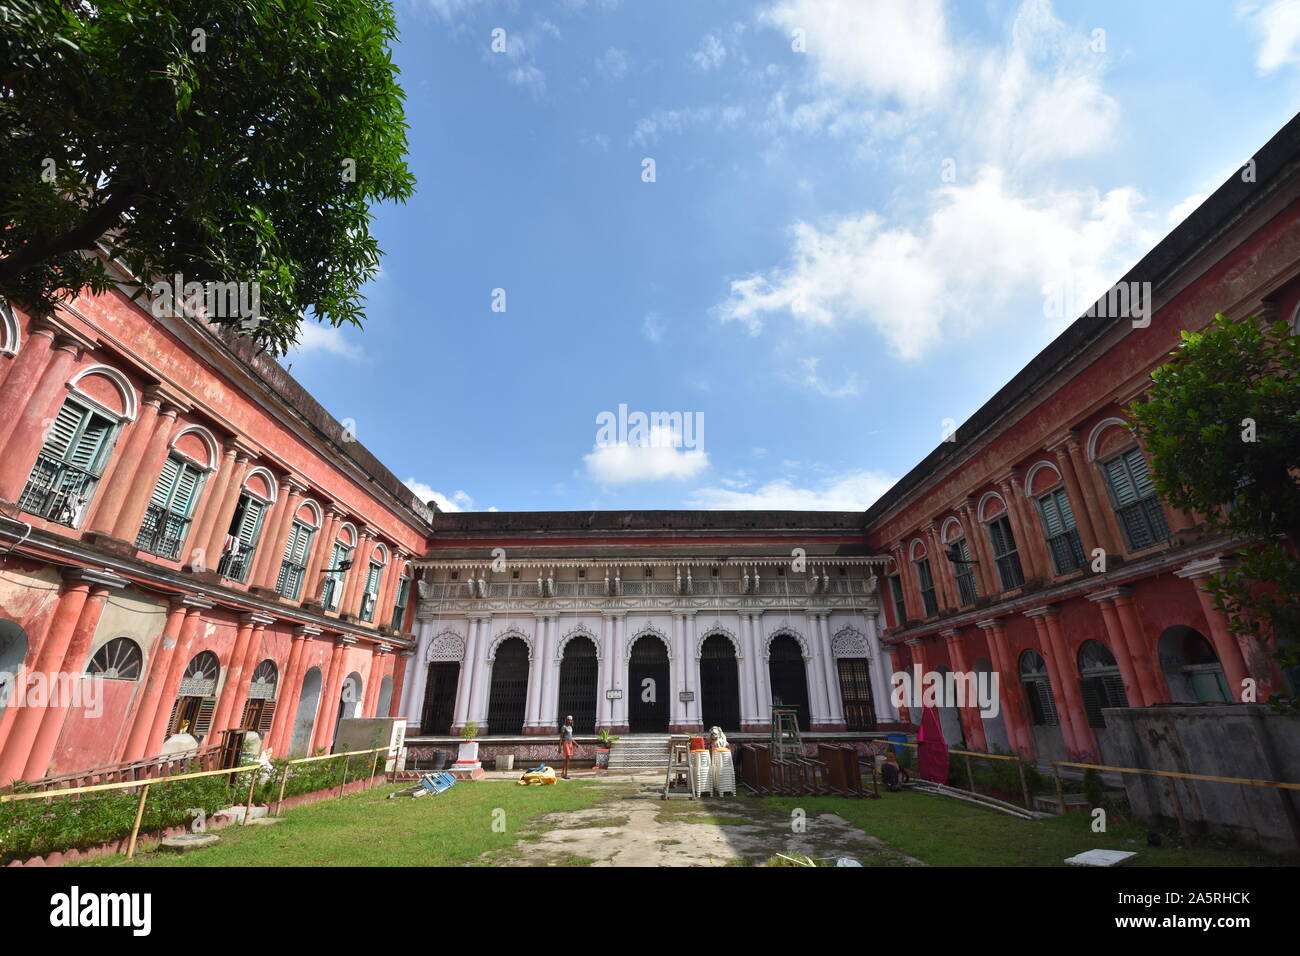 Cour intérieure de l'Shobhabazar Palais Royal (Gopinath Bari). 36 Nabakrishna Raja Street. Kolkata, Bengale occidental, Inde. Banque D'Images